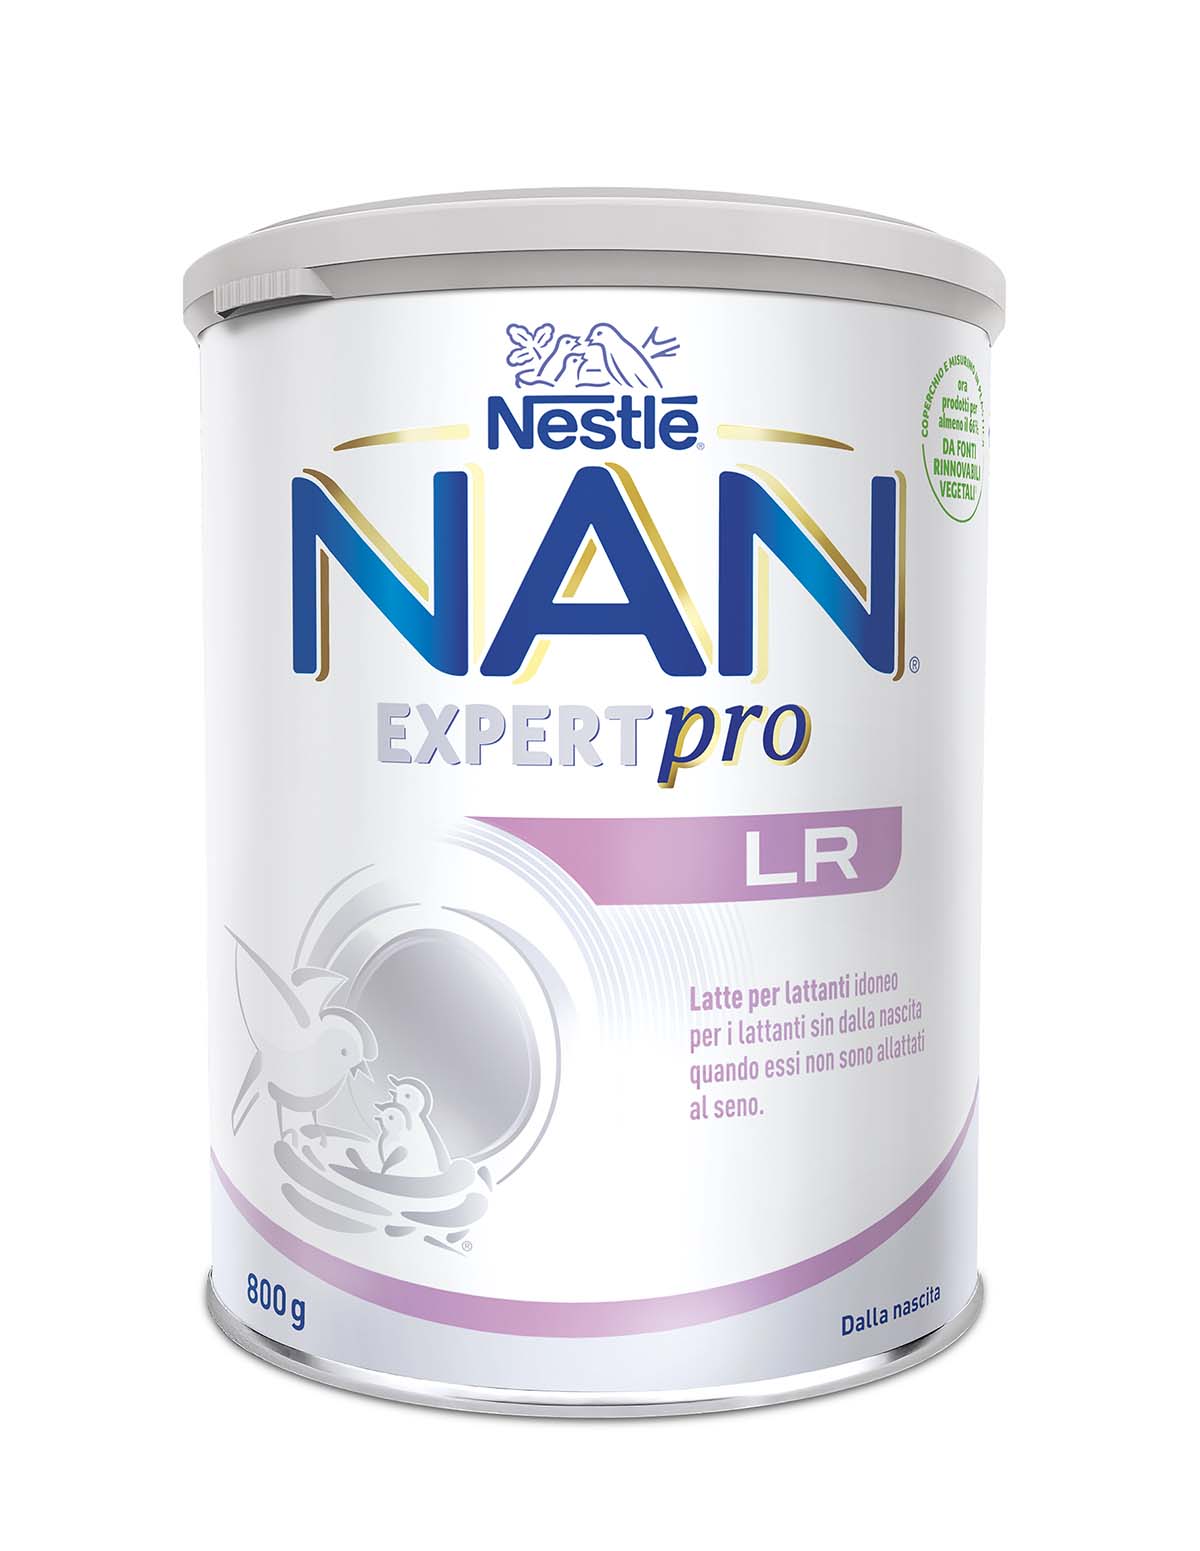 Nestlé NAN LR 800g. Latte per lattanti in polvere, dalla nascita al 6°mese